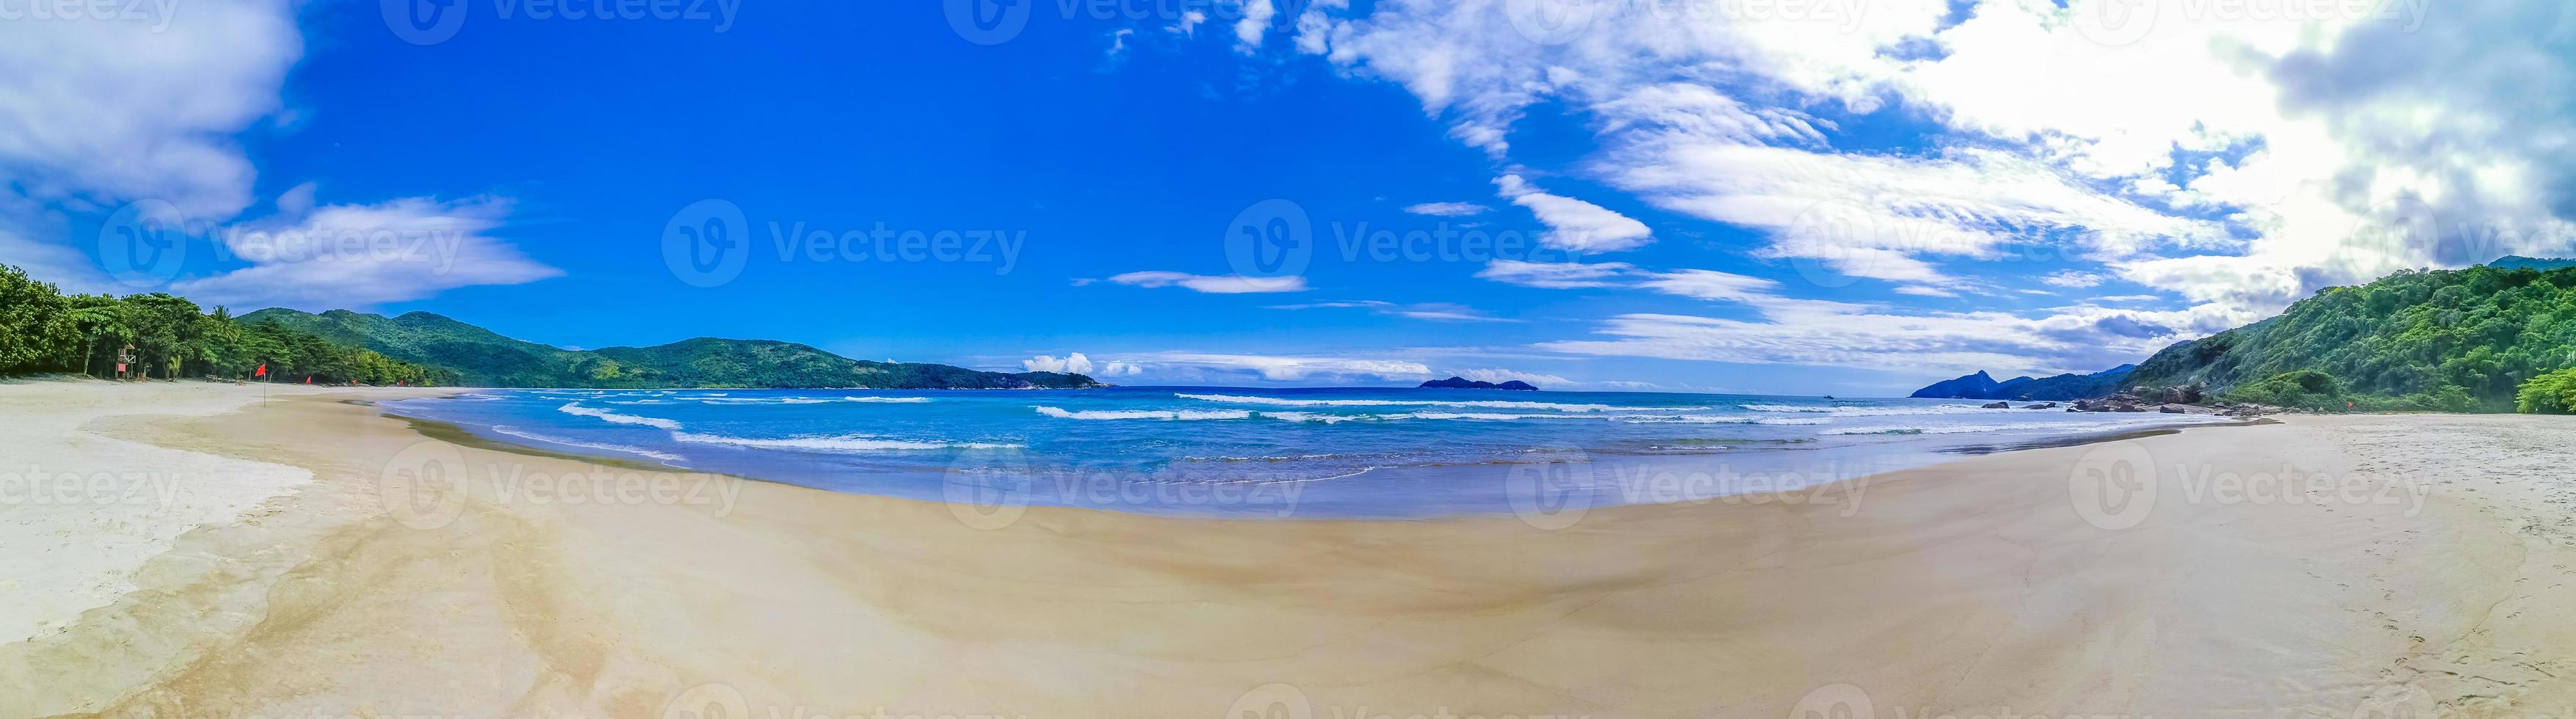 praia lopes mendes beach panorama tropisk ö ilha grande brasilien. foto